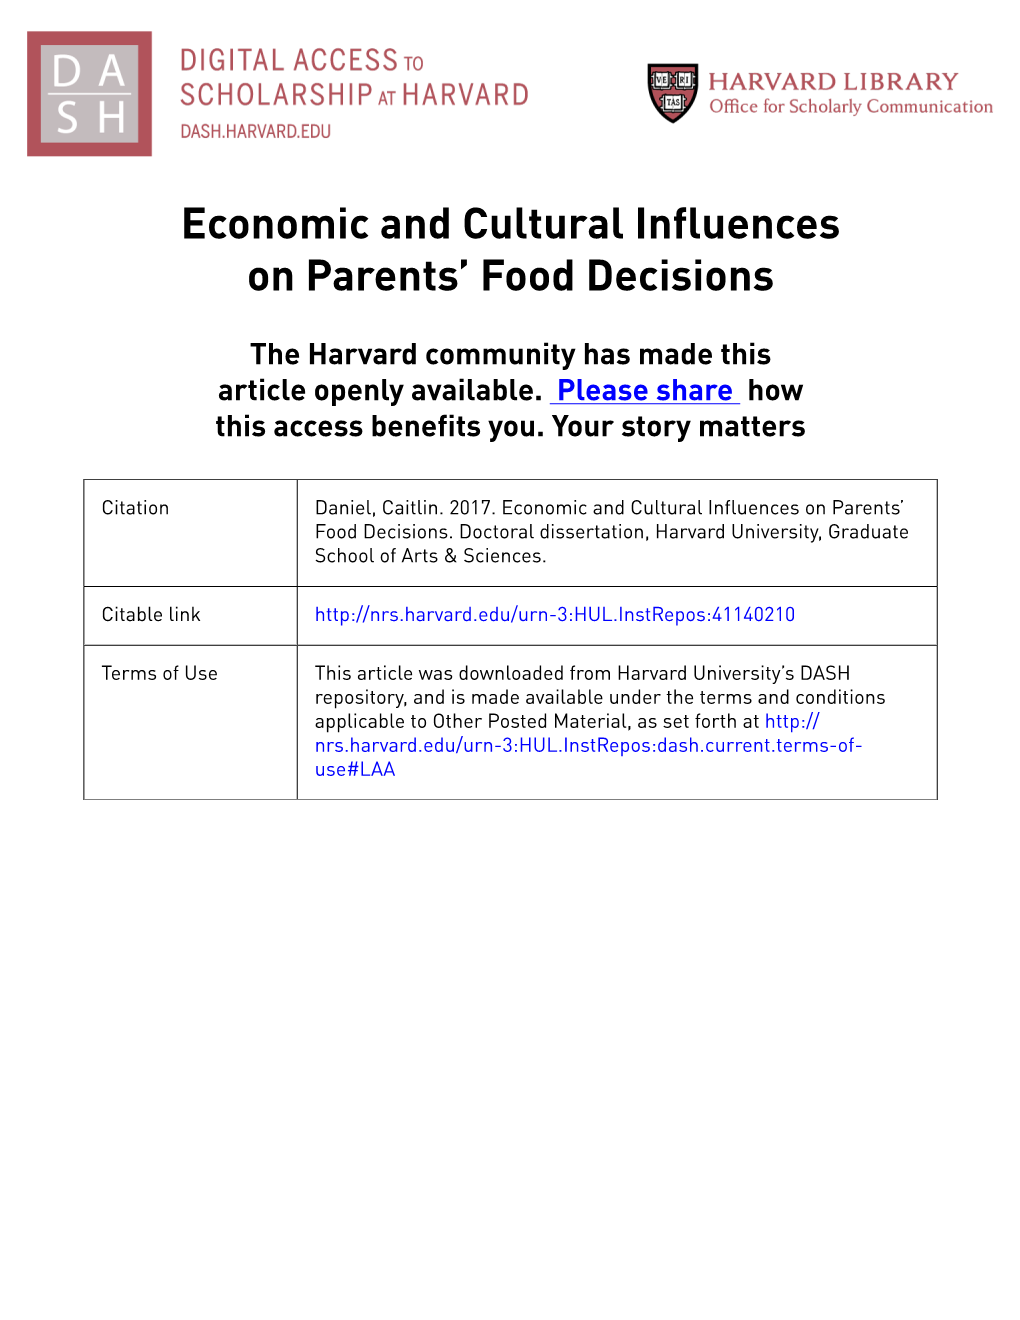 Economic and Cultural Influences on Parents' Food Decisions